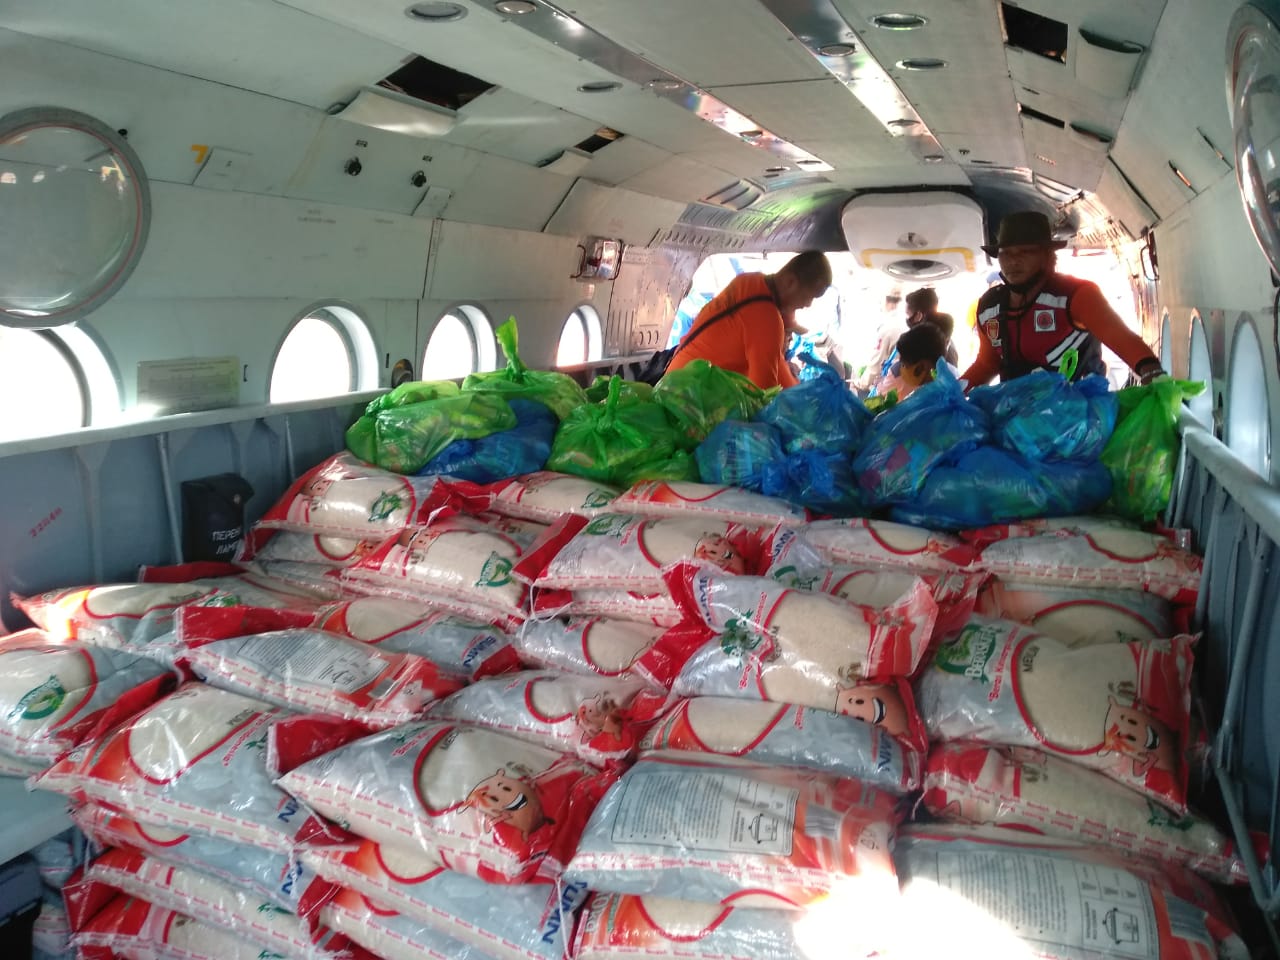 Gubernur Kalteng Melakukan Pelepasan Simbolis Bantuan Sosial Korban Banjir Melalui Jalur Udara1